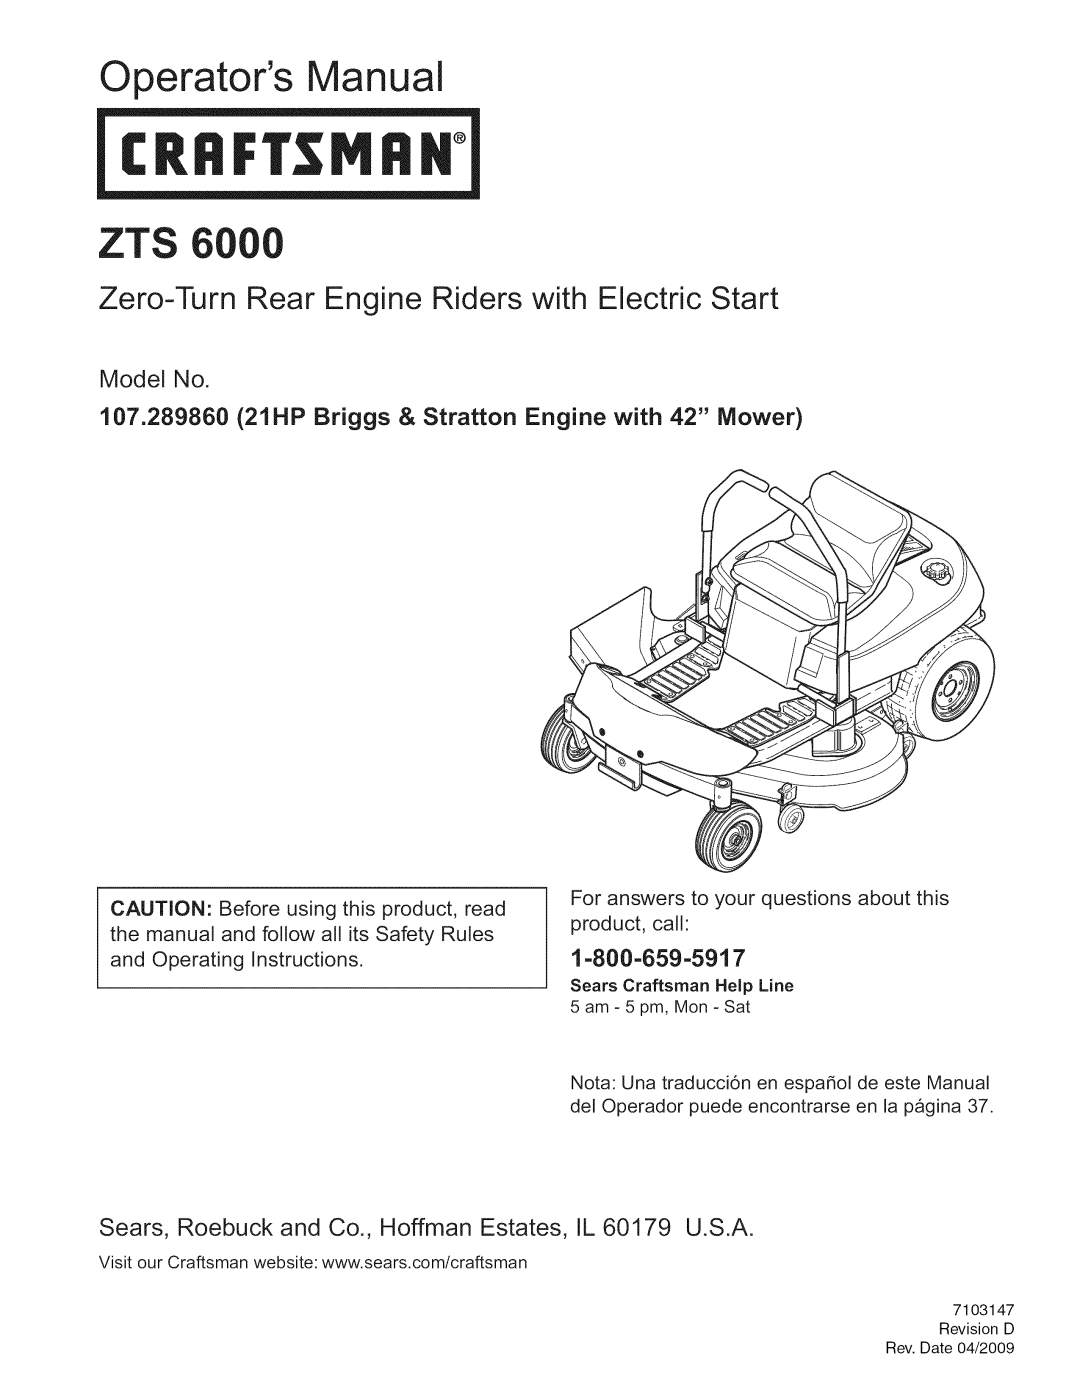 Craftsman 107.289860 manual Operators anual, Zero-TurnRear Engine Riders with Electric Start, Model No, 1-800-659-5917 